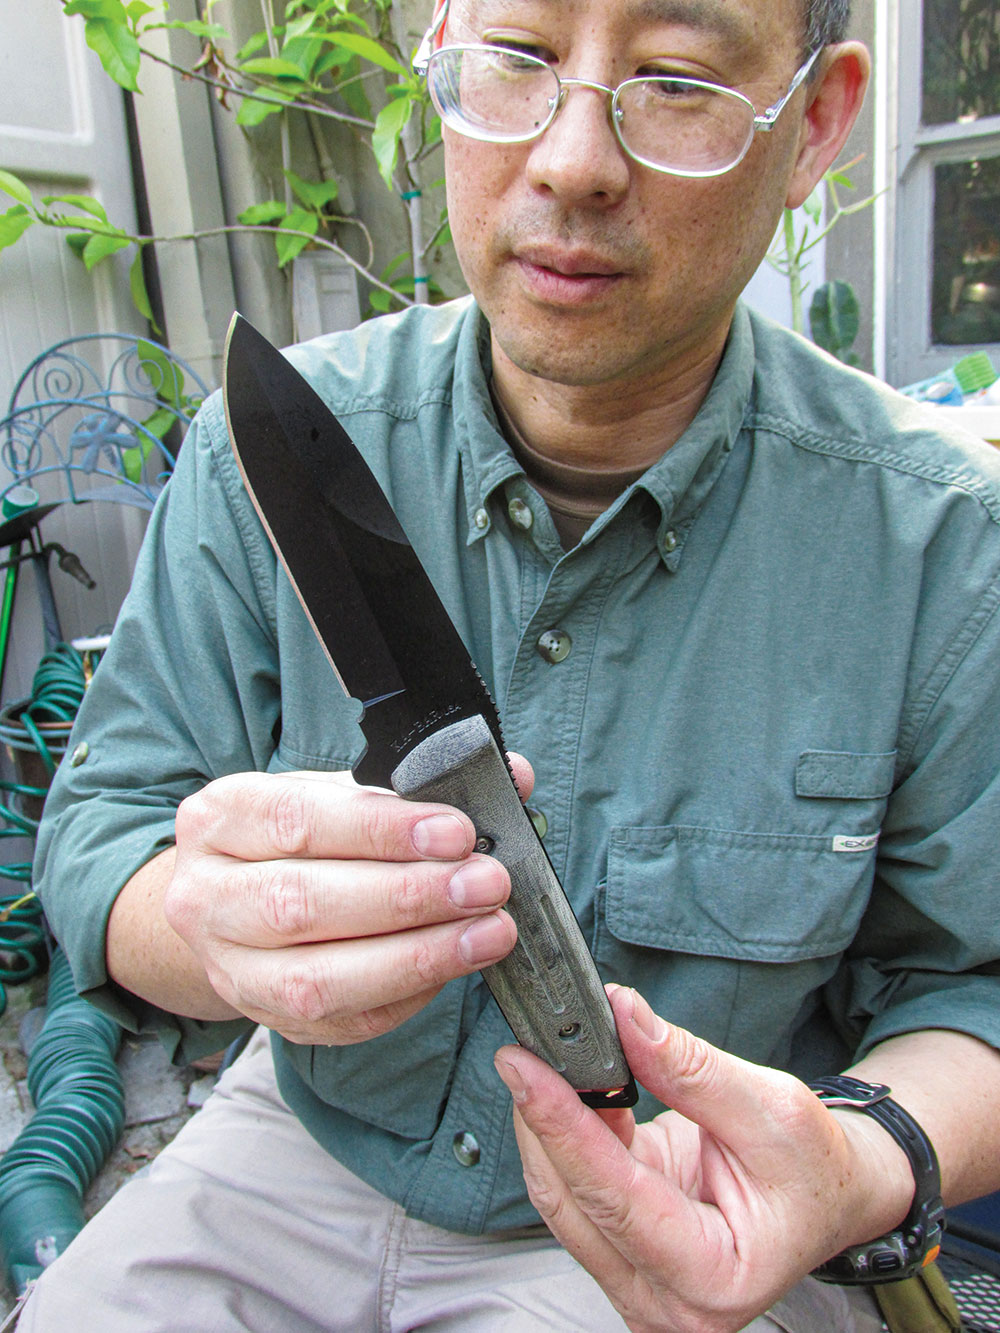 Army veteran Mark Tsunokai is partial to his full-tang KA-BAR knife.